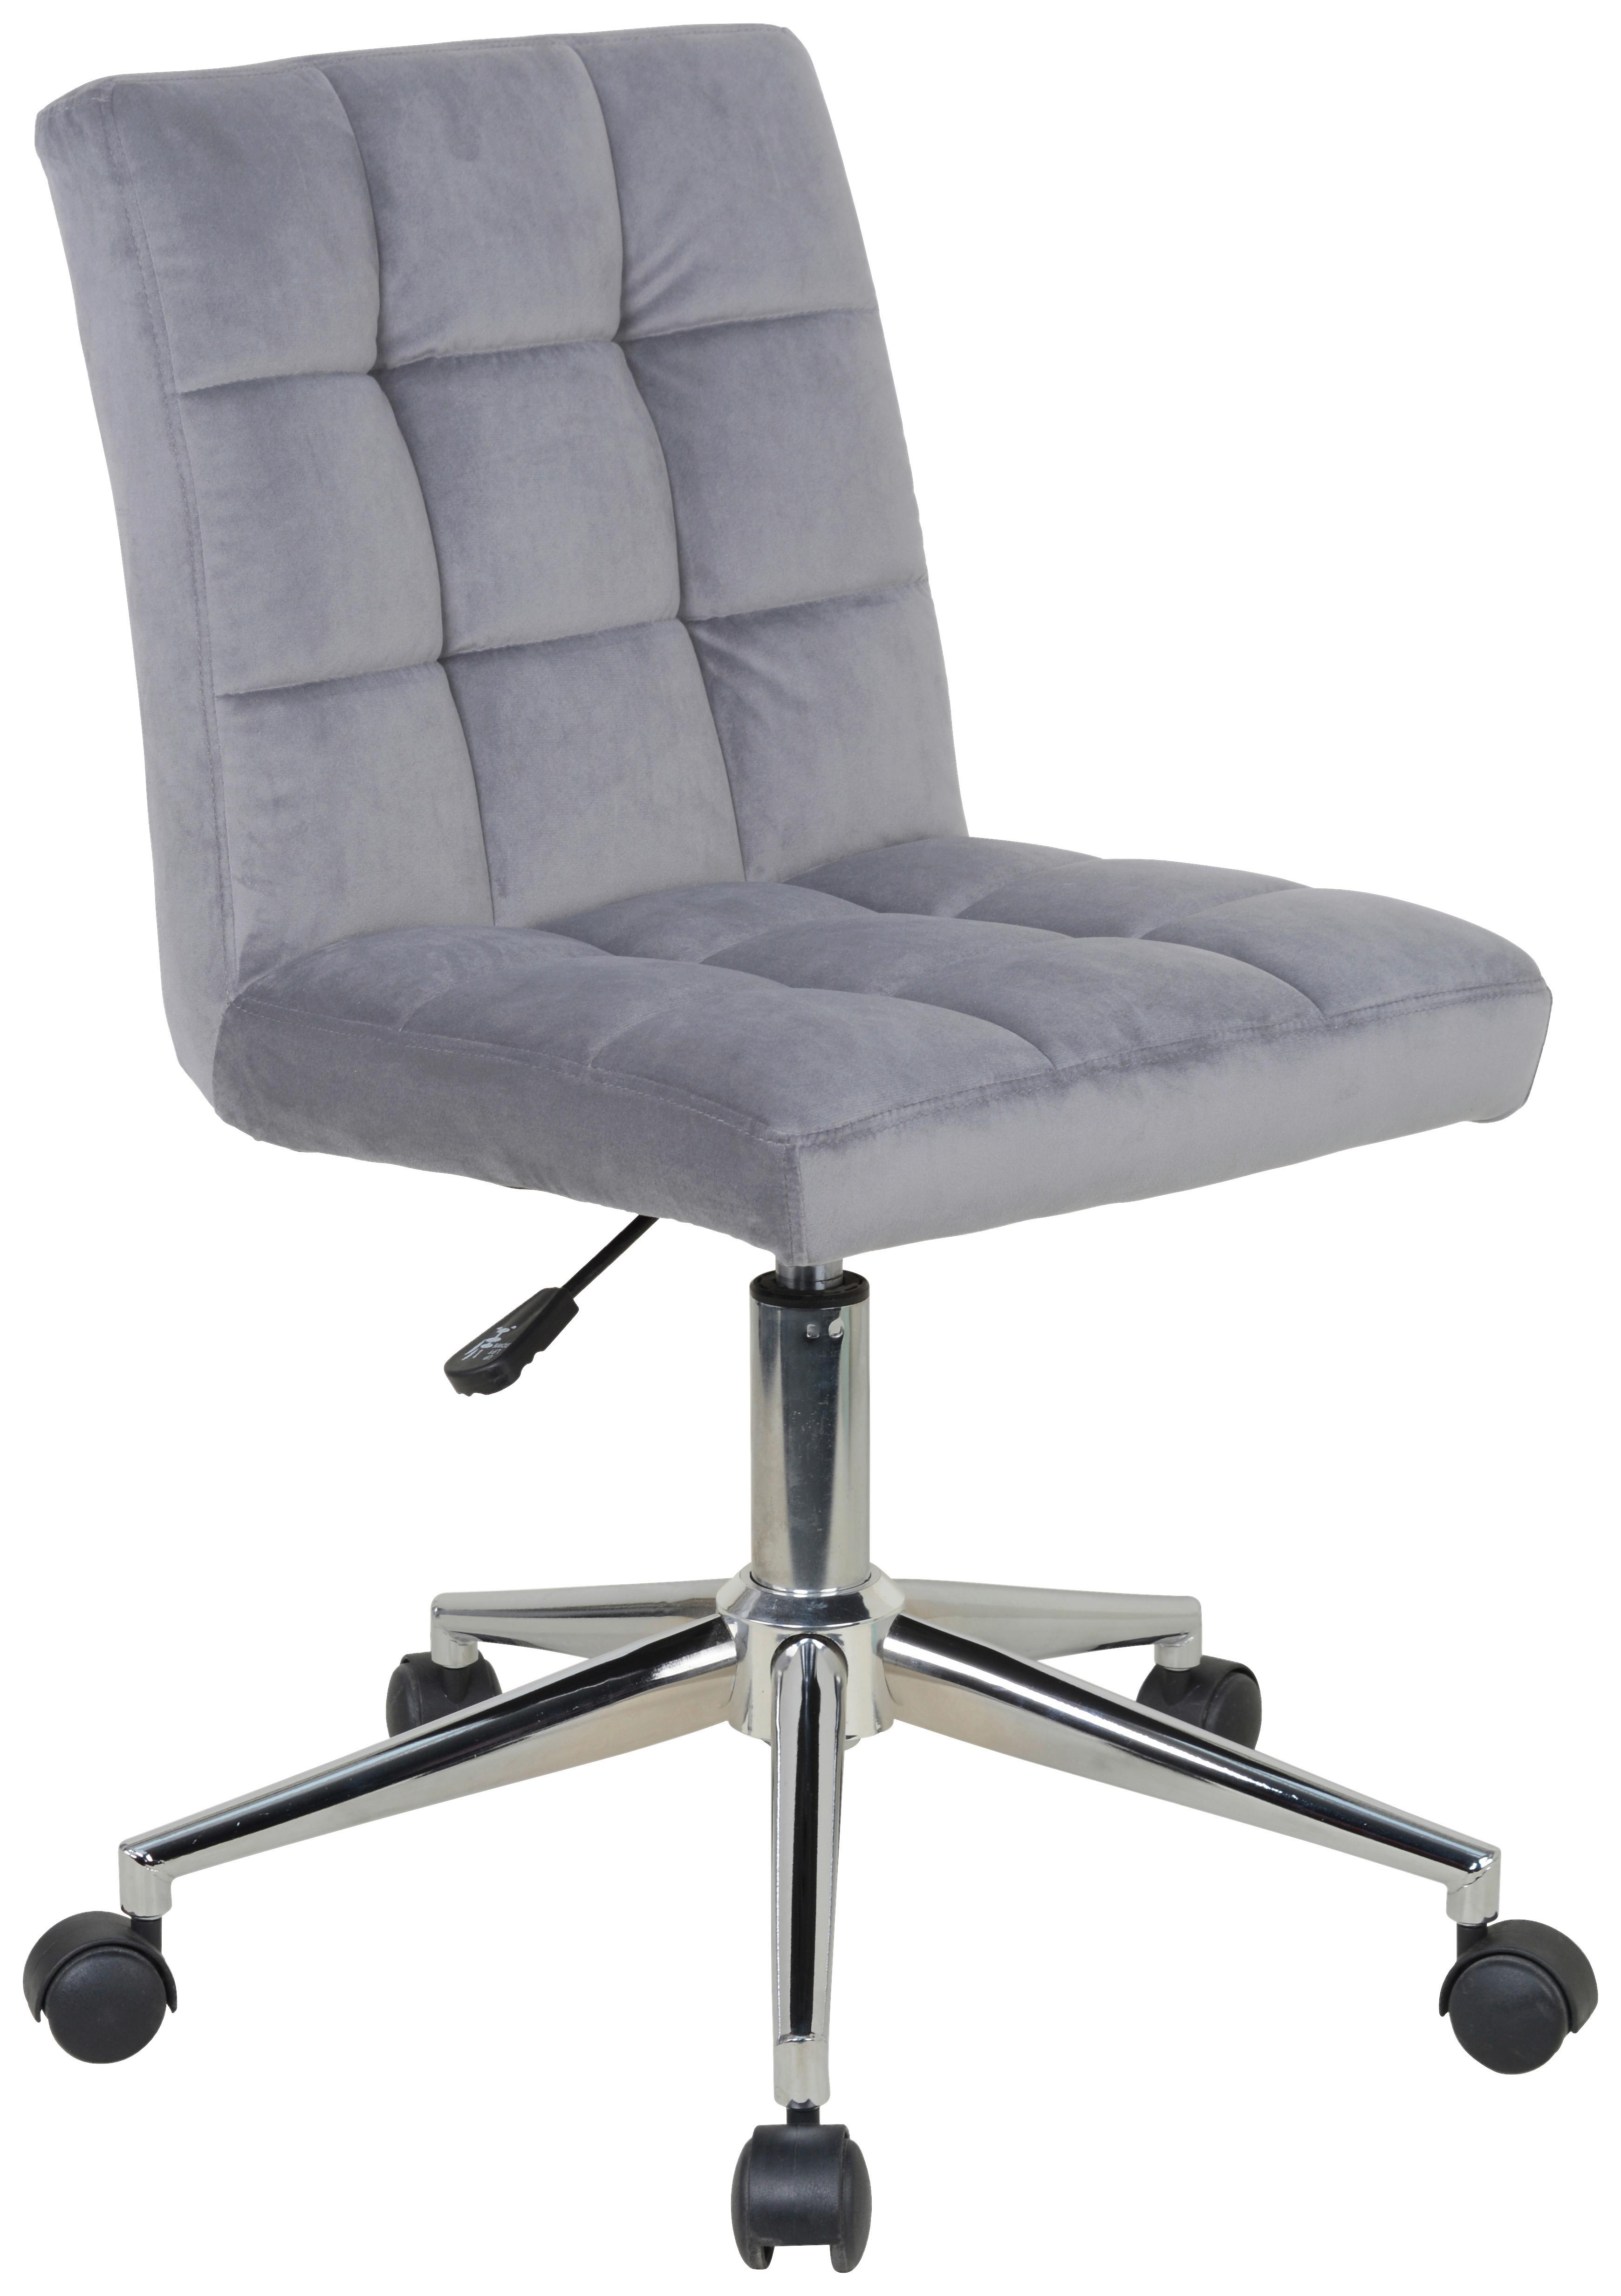 Dětská Židle Easy - šedá/barvy chromu, Moderní, kov/dřevo (41/79,5-89/54cm) - Modern Living